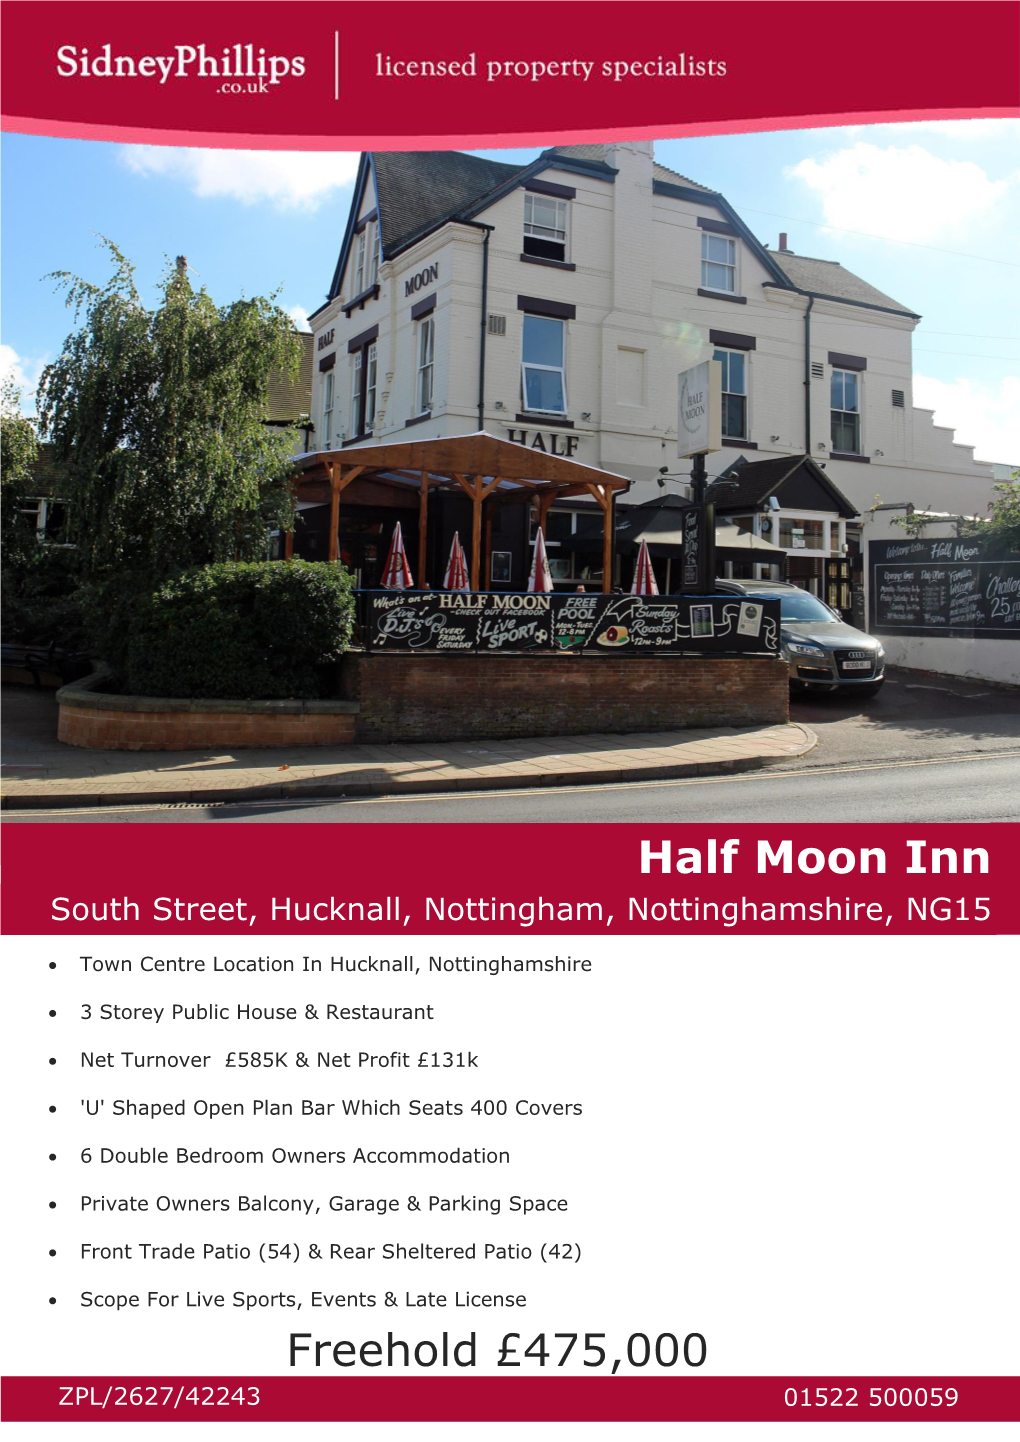 Half Moon Inn Freehold £475,000